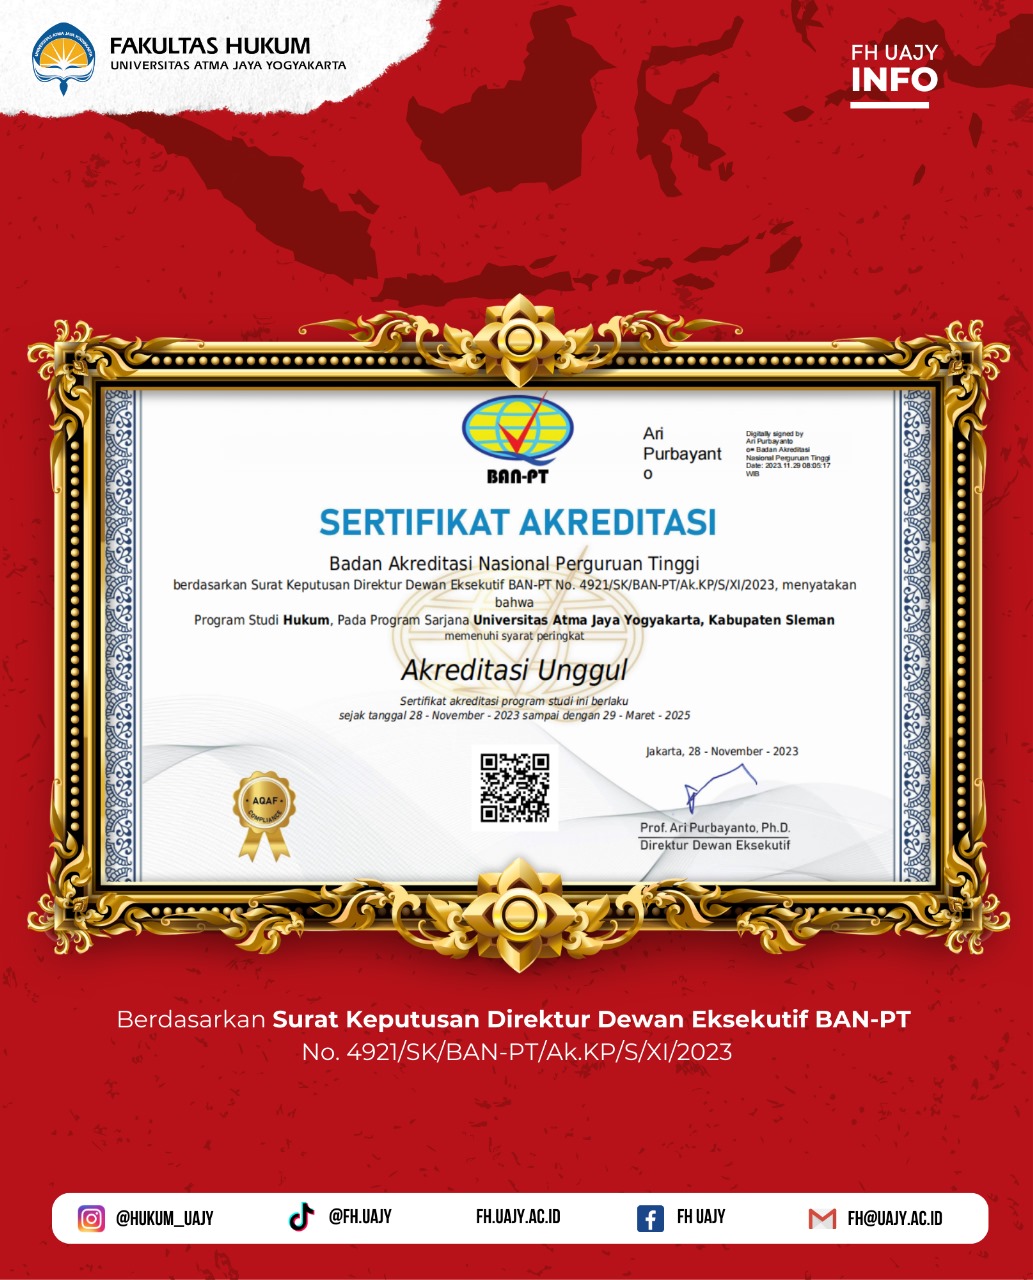 Fakultas Hukum Universitas Atma Jaya Yogyakarta Menjadi Salah Satu Perguruan Tinggi Swasta Berkareditasi Unggul Image